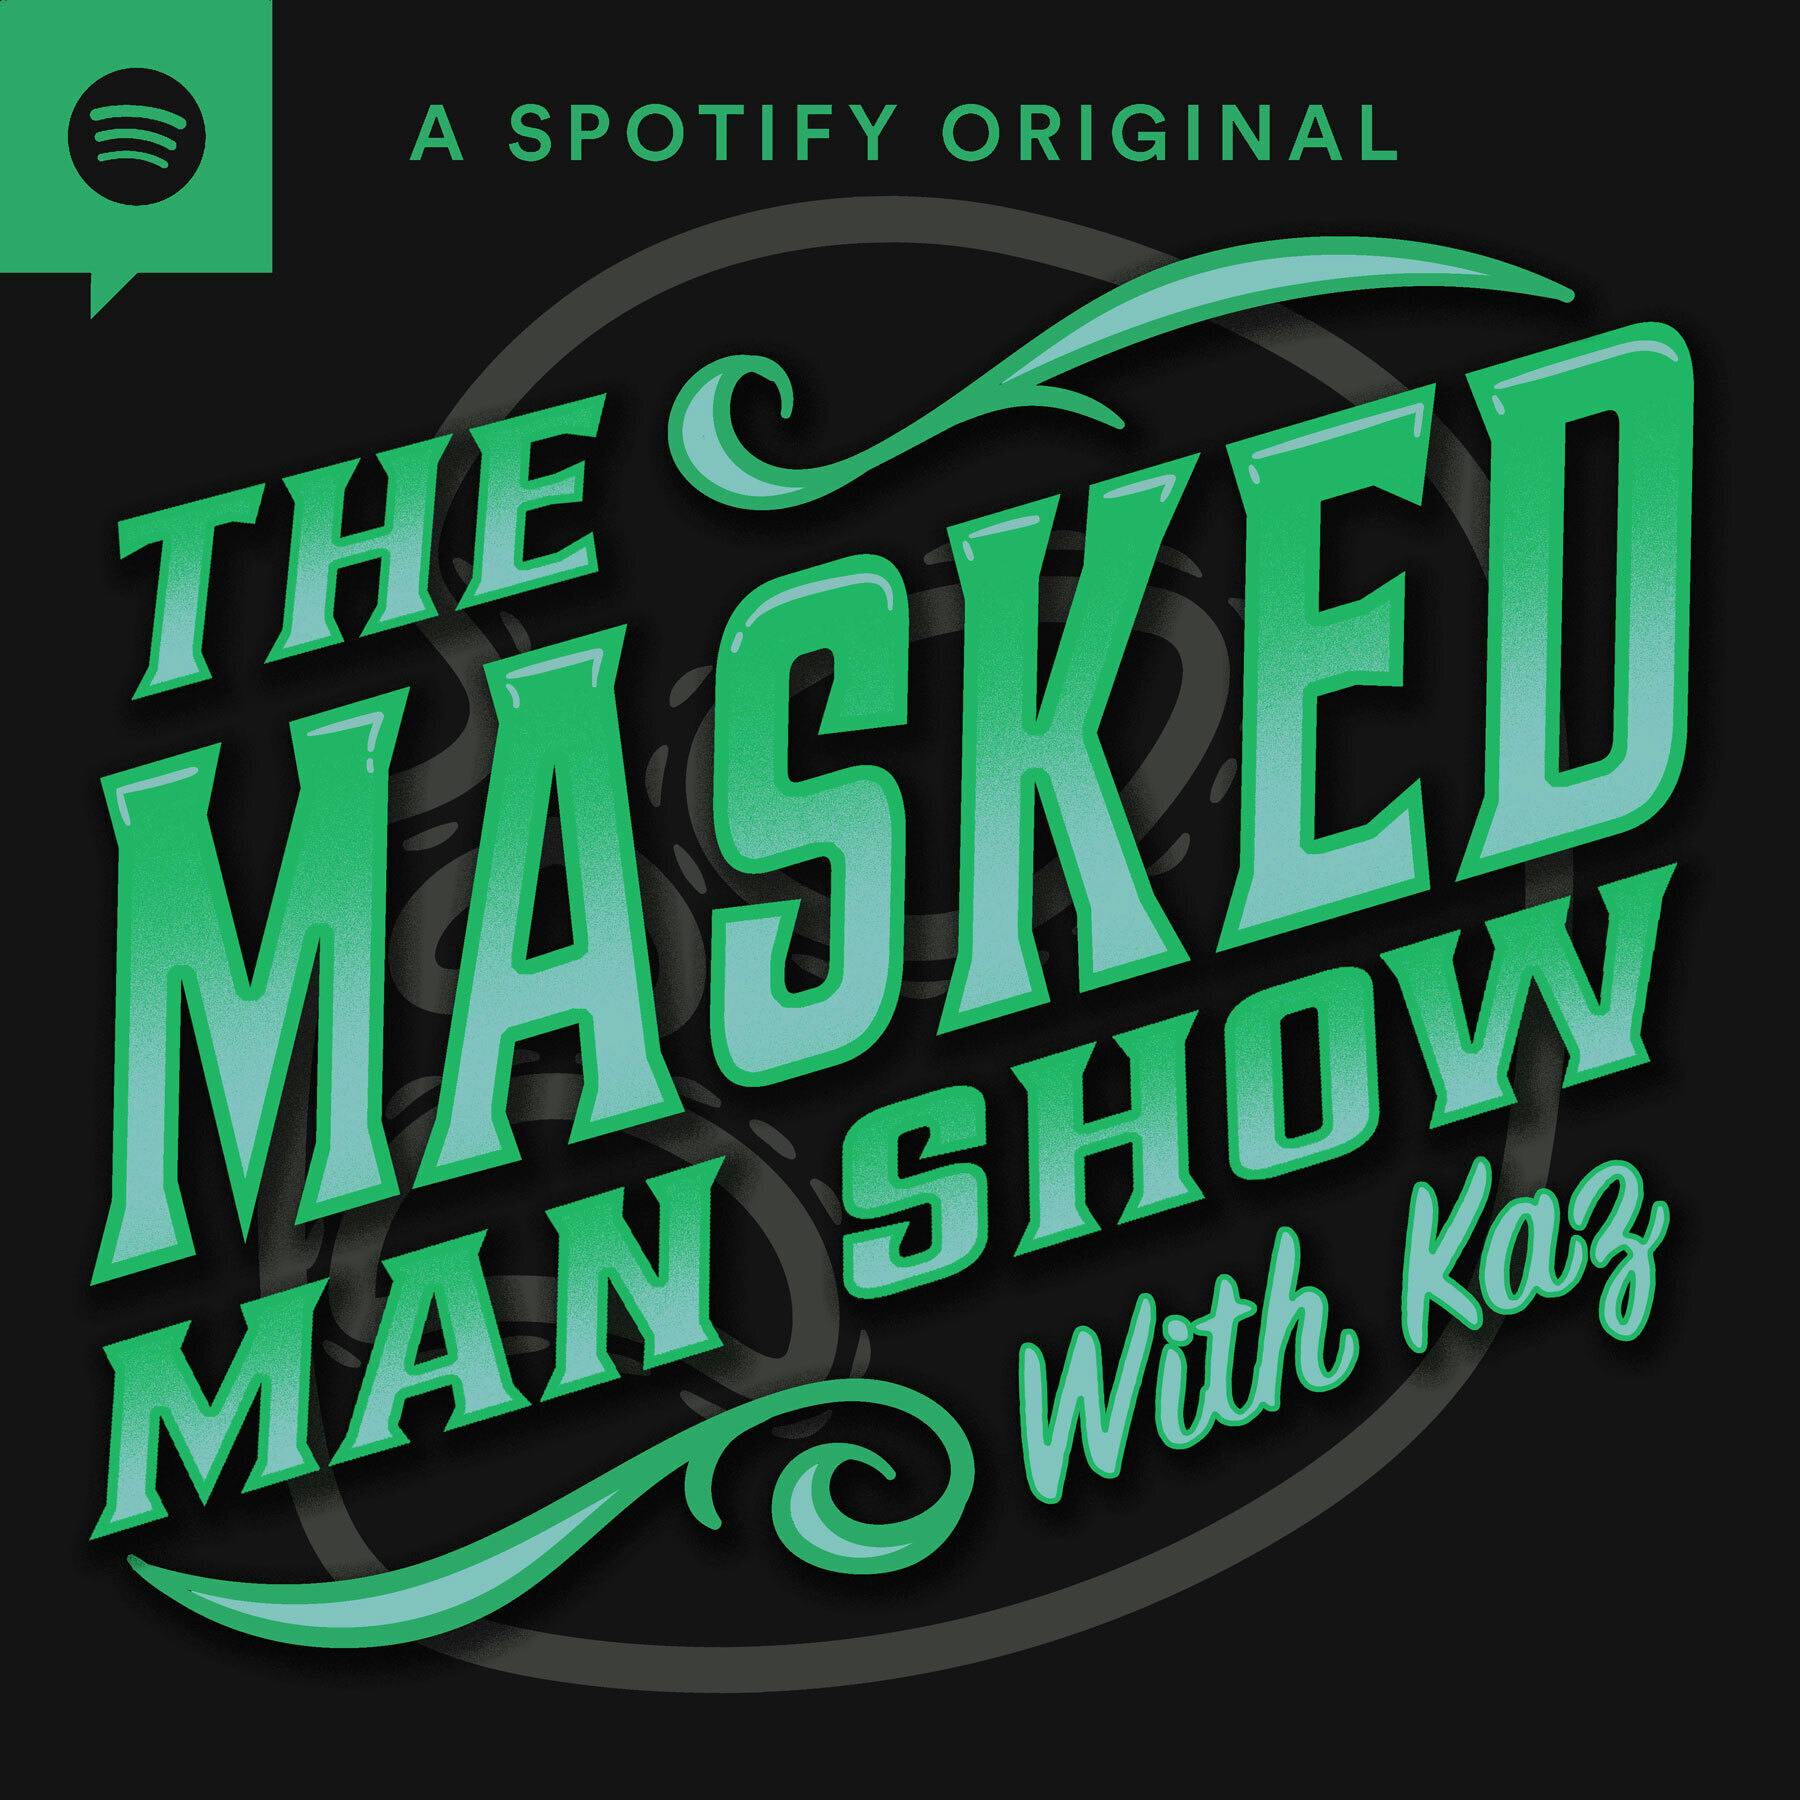 Brian Gewirtz on ‘Who Killed WCW?’ | The Masked Man Show